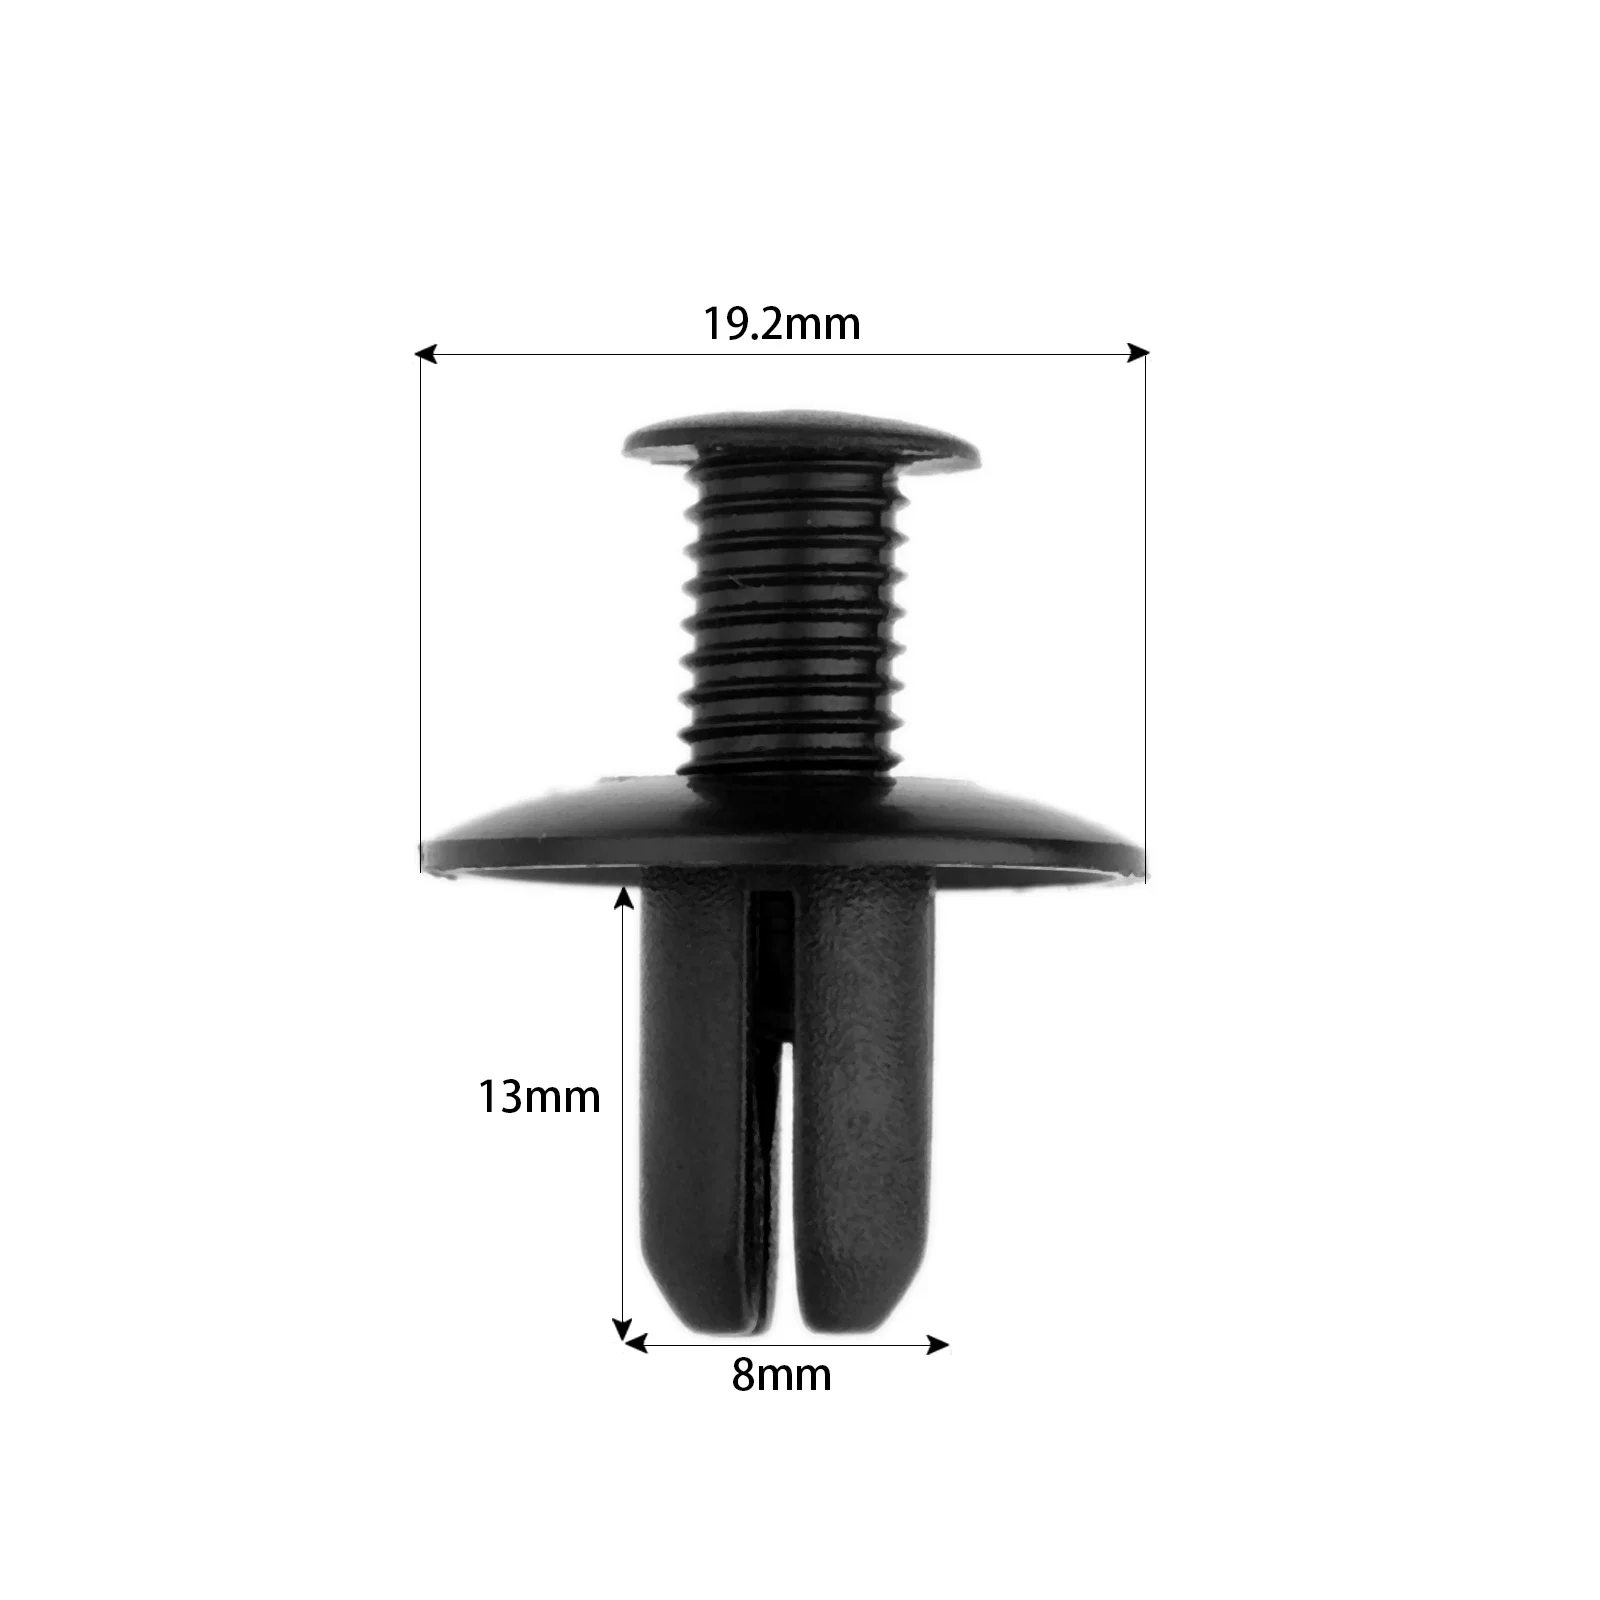 50pcs/set 8mm Hole Plastic Rivets Fastener Push Clips Black For